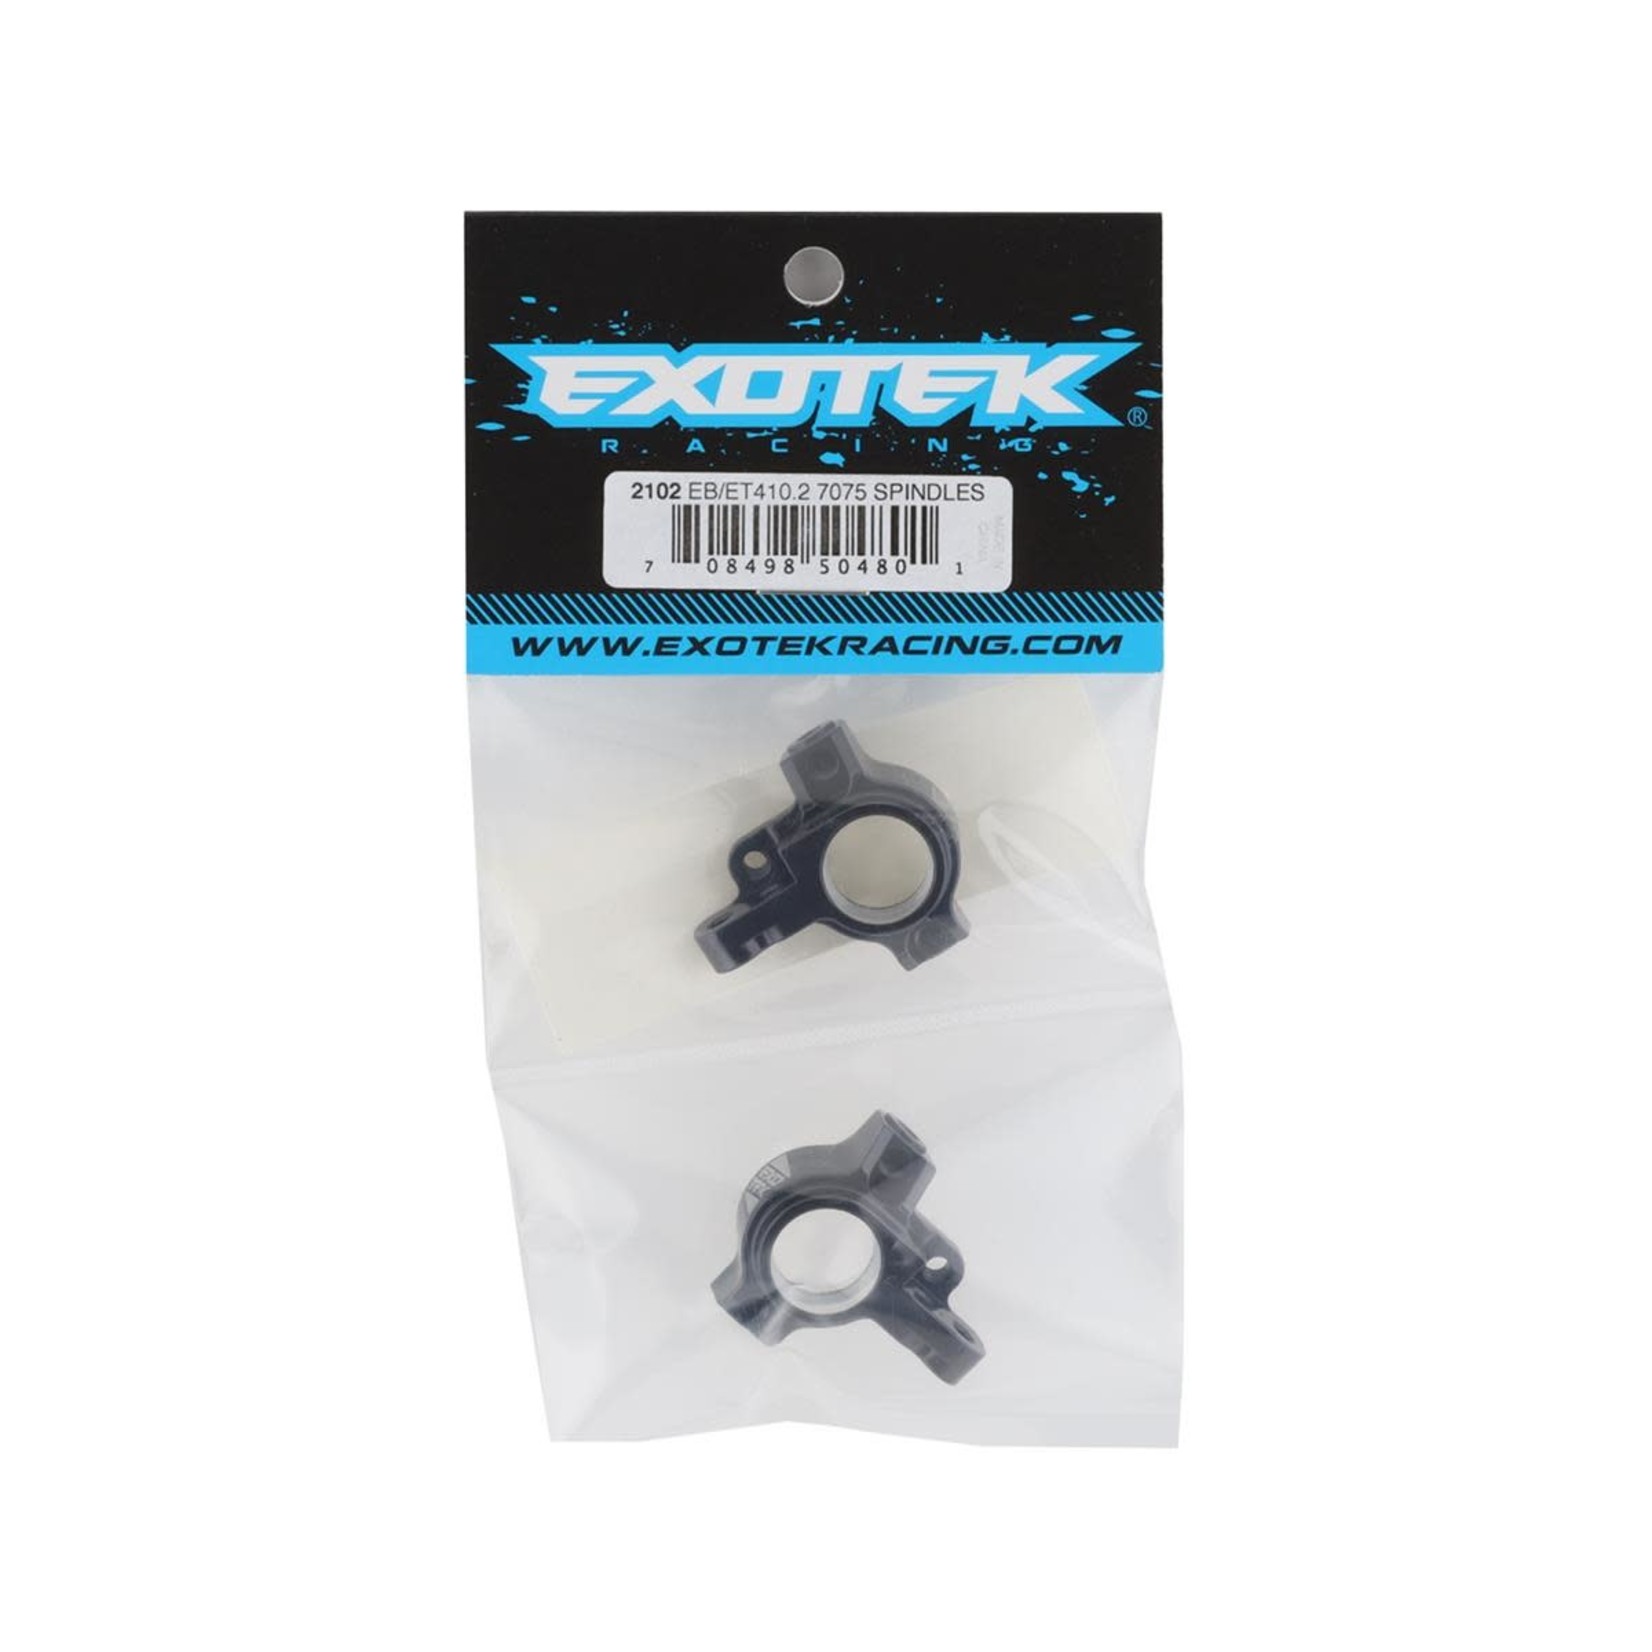 Exotek Exotek EB410.2/ET410.2 HD Aluminum Adjustable Spindles (2) #2102